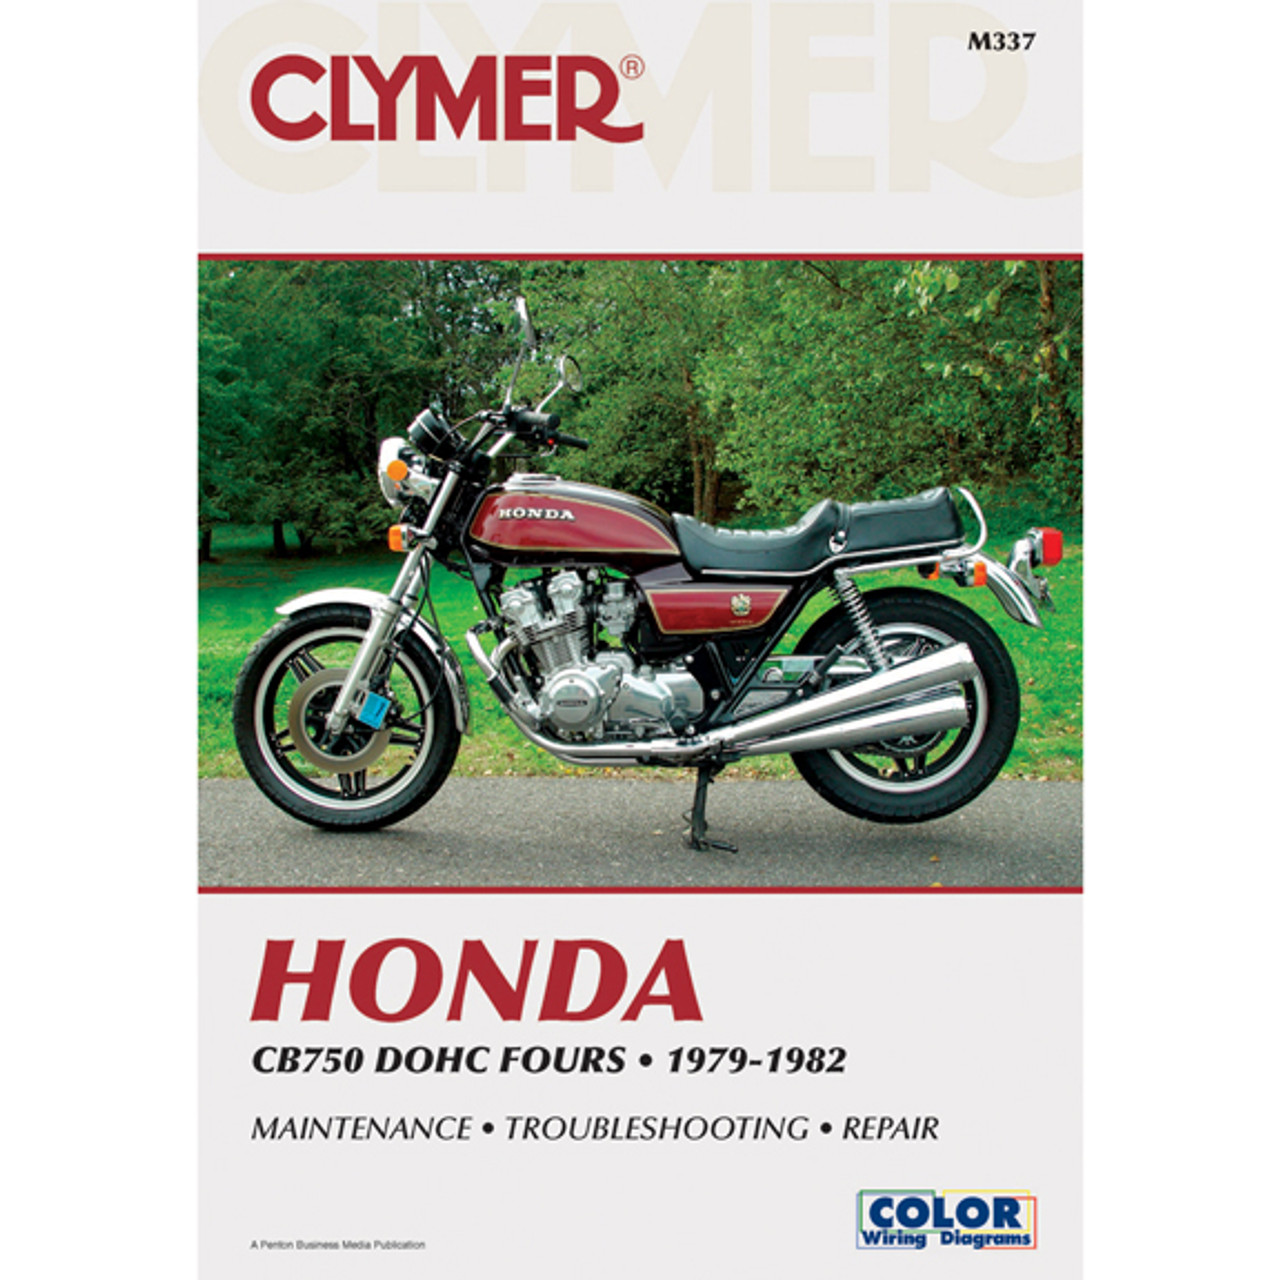 CB 750 MOTORCYCLE SHOP SERVICE REPAIR MANUAL BOOK 79-82 HONDA CB750 M337 